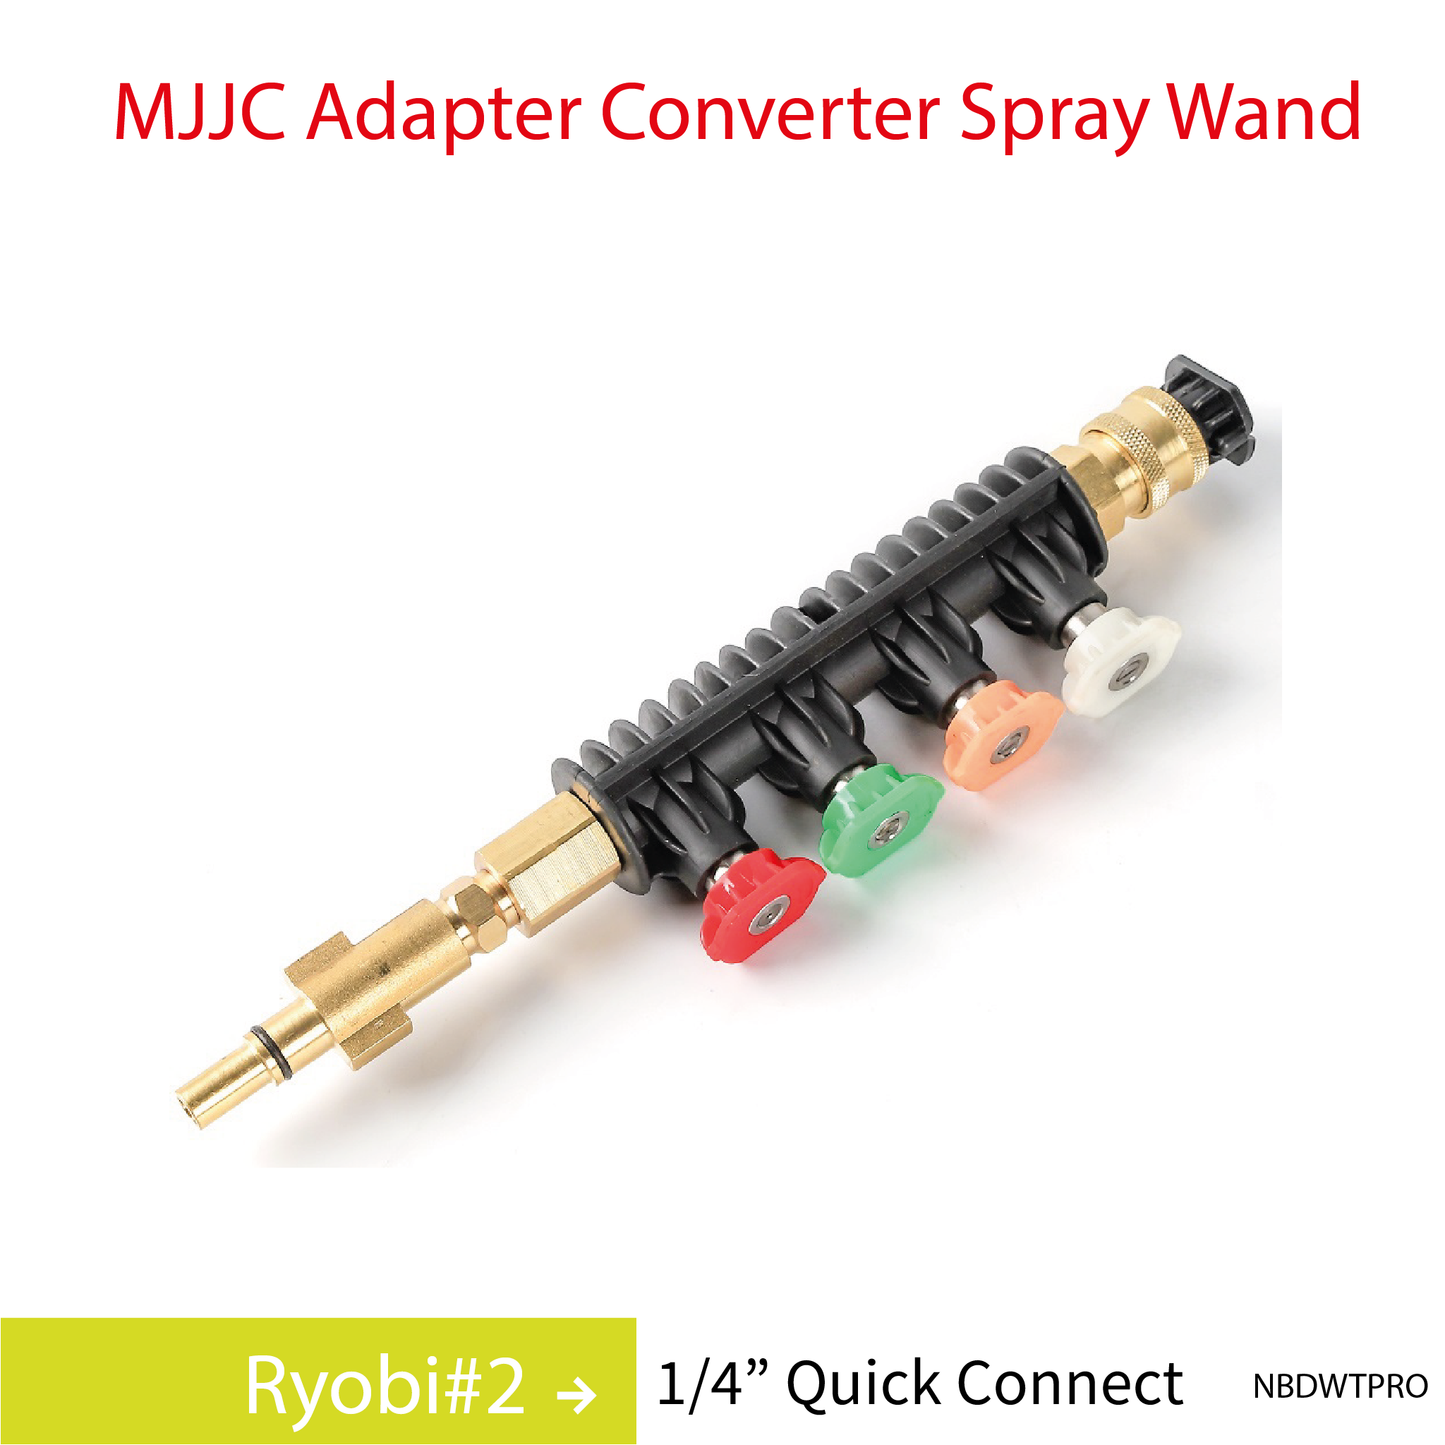 Ryobi#2 MJJC Adapter Conversion Converter pressure washer Spray Wand with 5 spray tips